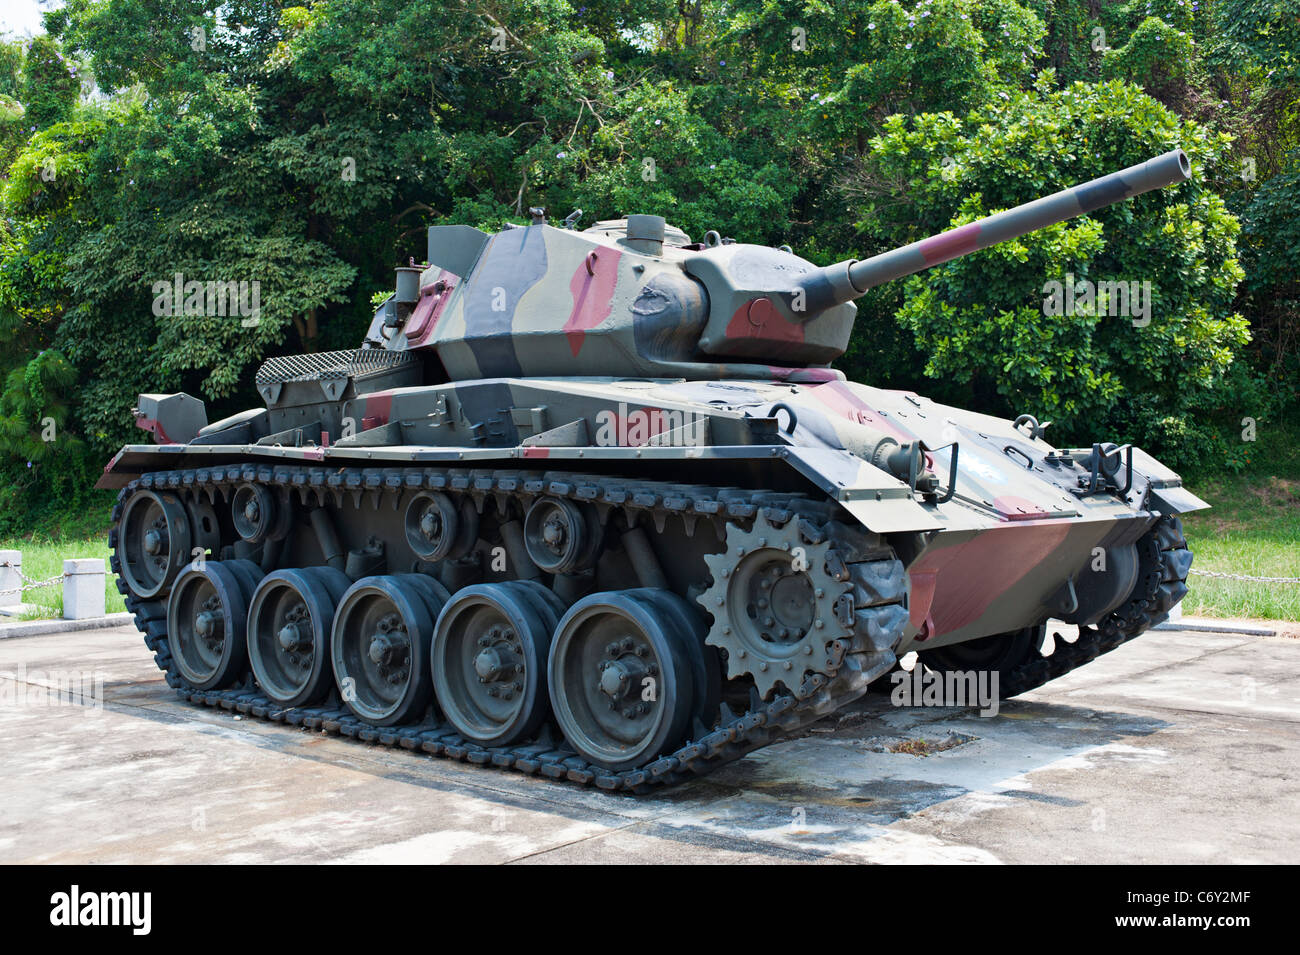 M-24 leichte Panzer, Kinmen Nationalpark, 823 Artillerie Schlacht Kriegsmuseum, Kinmen, Taiwan Stockfoto